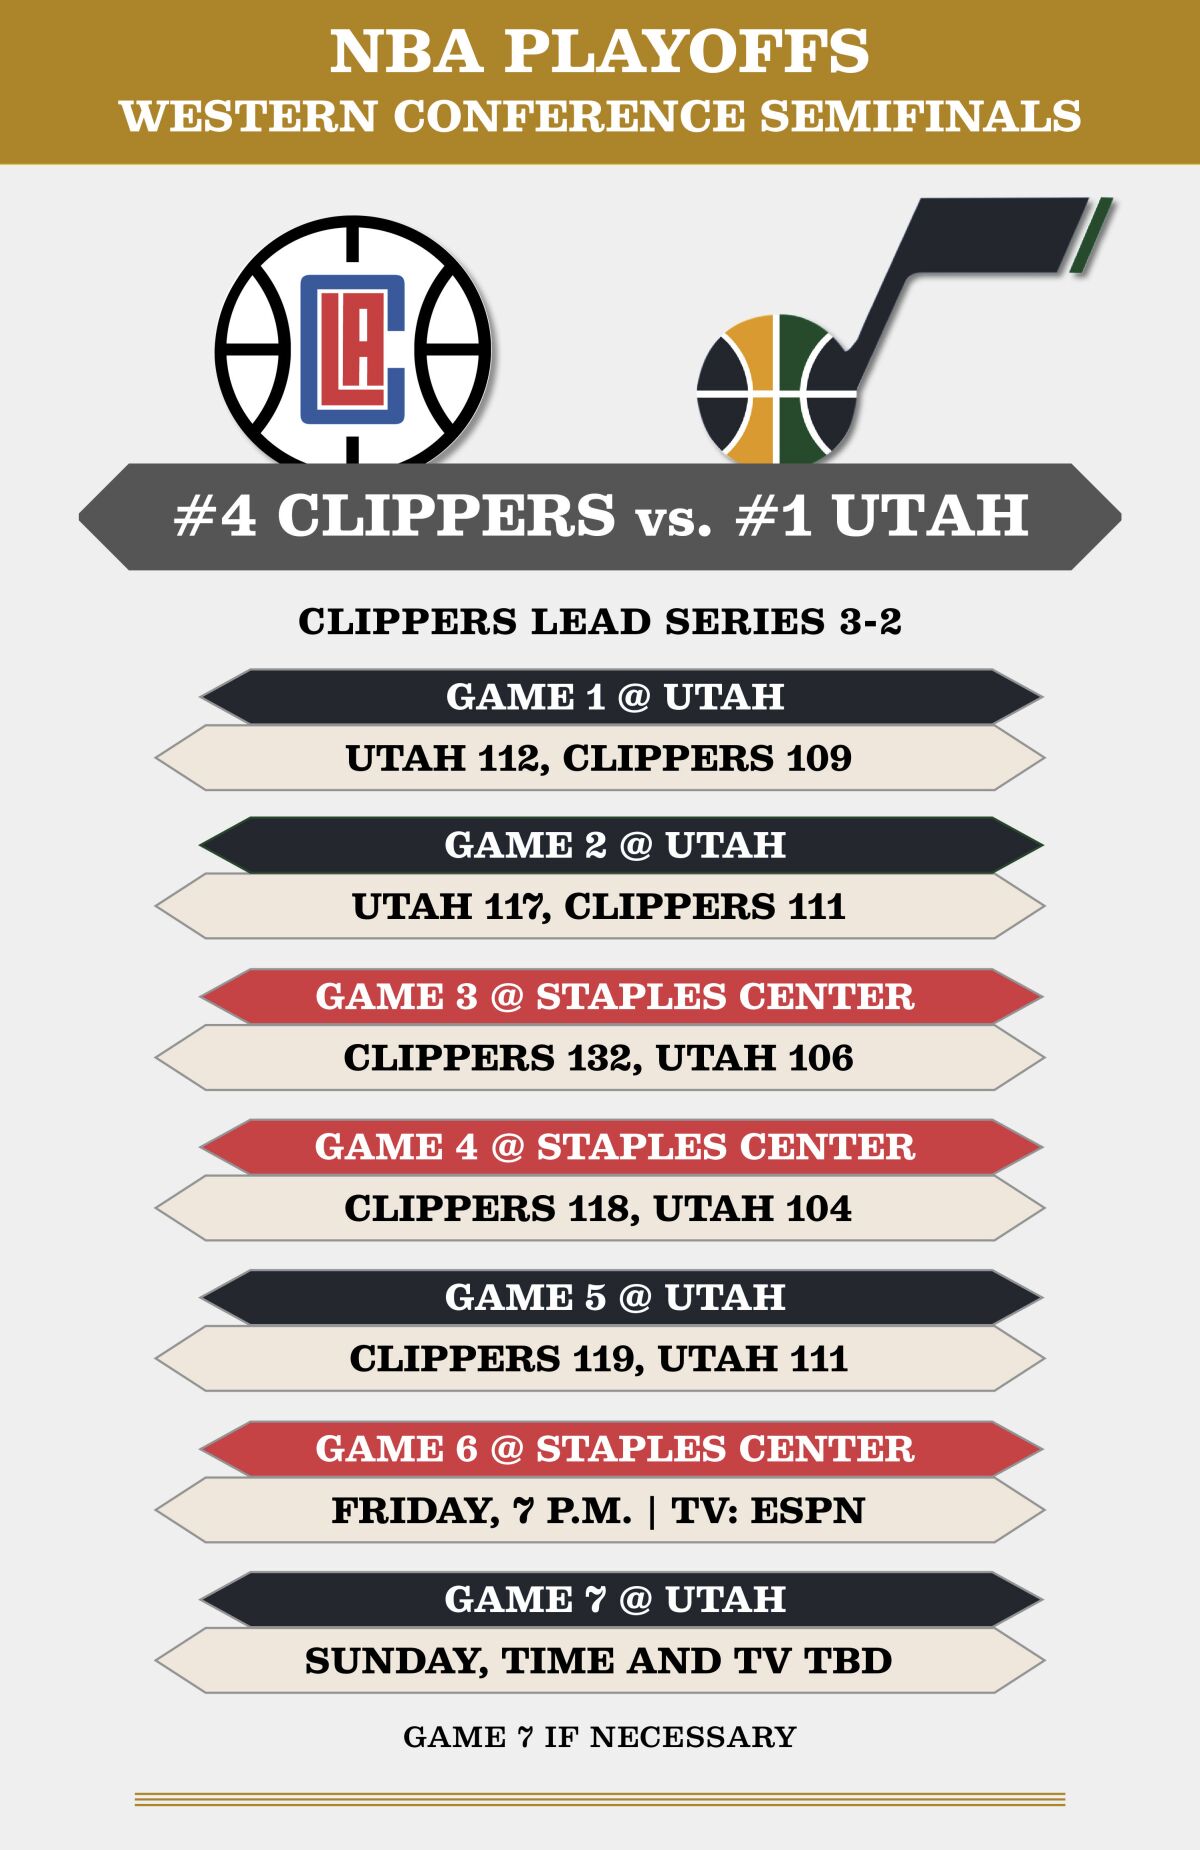 Clippers-Jazz schedule